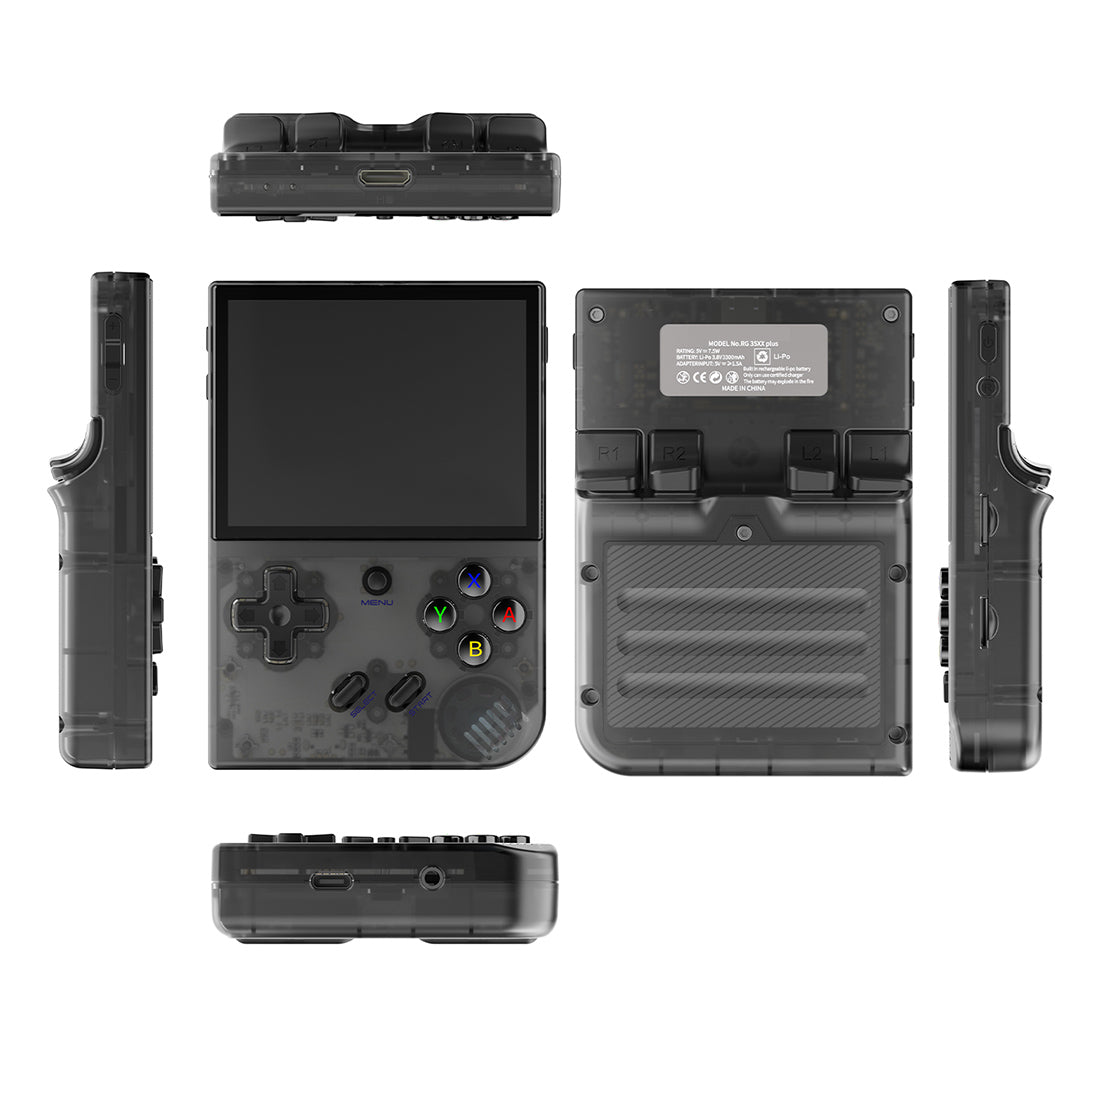 ANBERNIC RG35XX Plus Retro Handheld Gaming Console